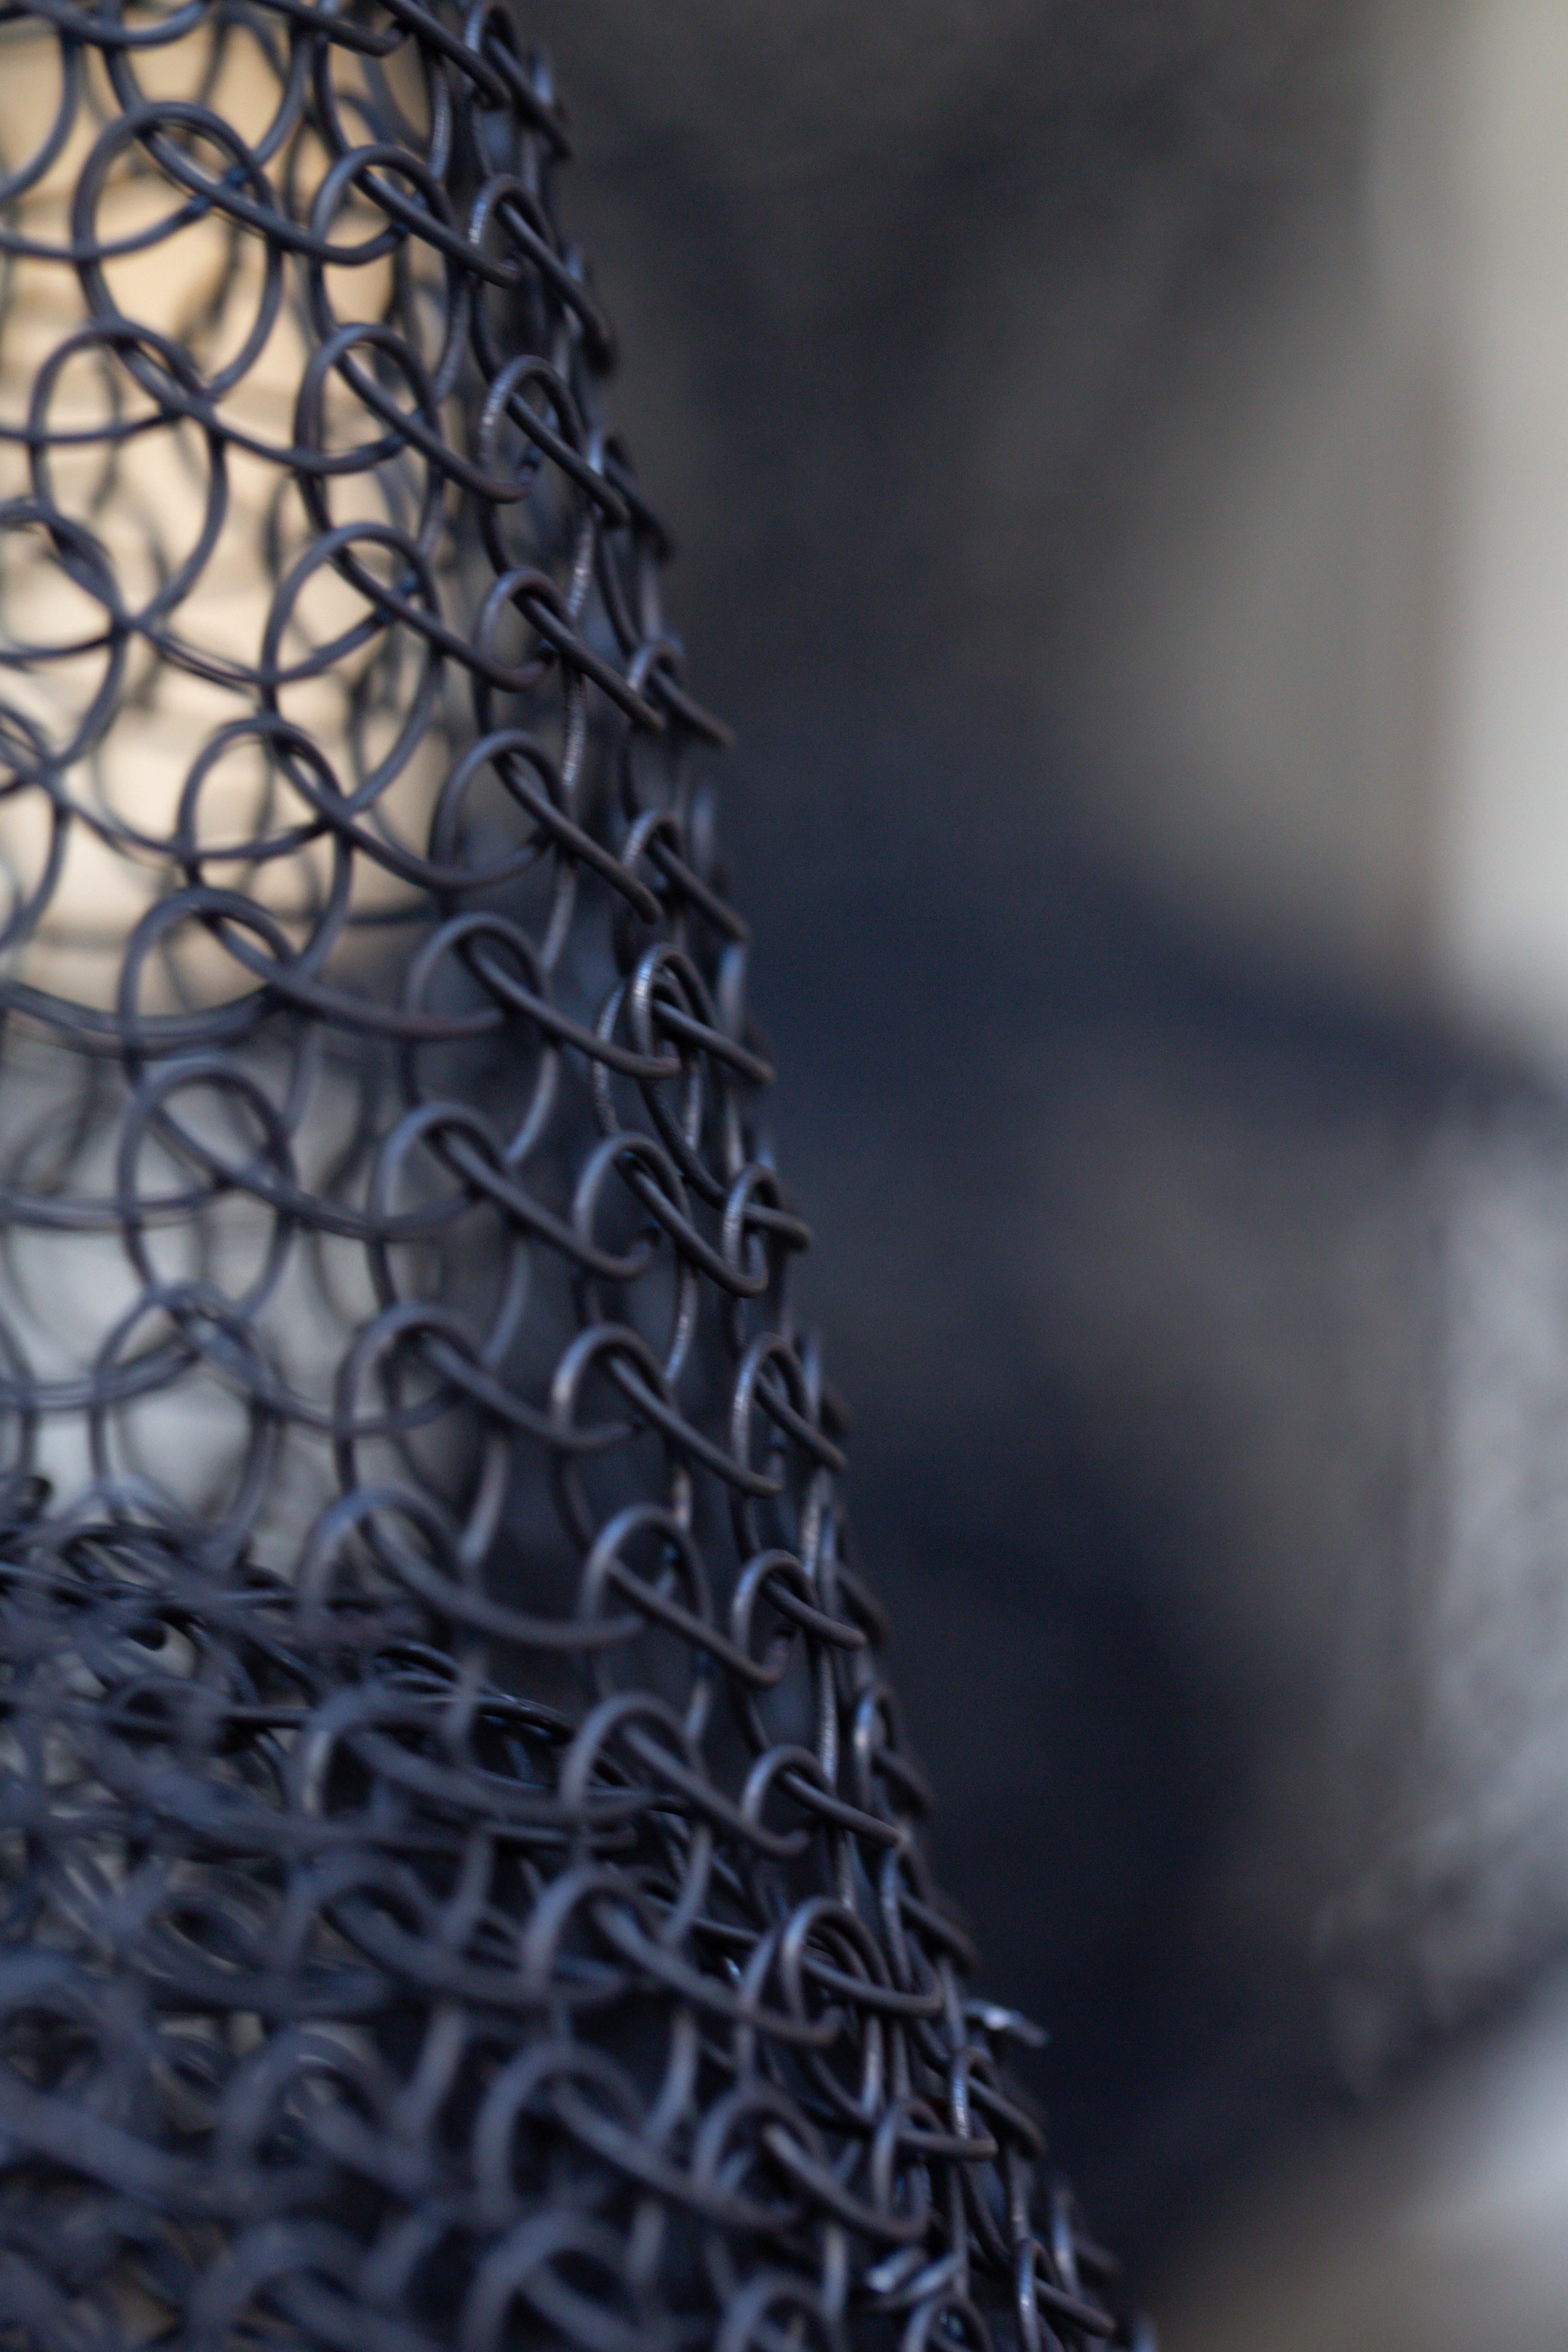 Galvanized Contemporary Hand-Woven Wire Sculpture by Ulrikk Dufossé, 2021